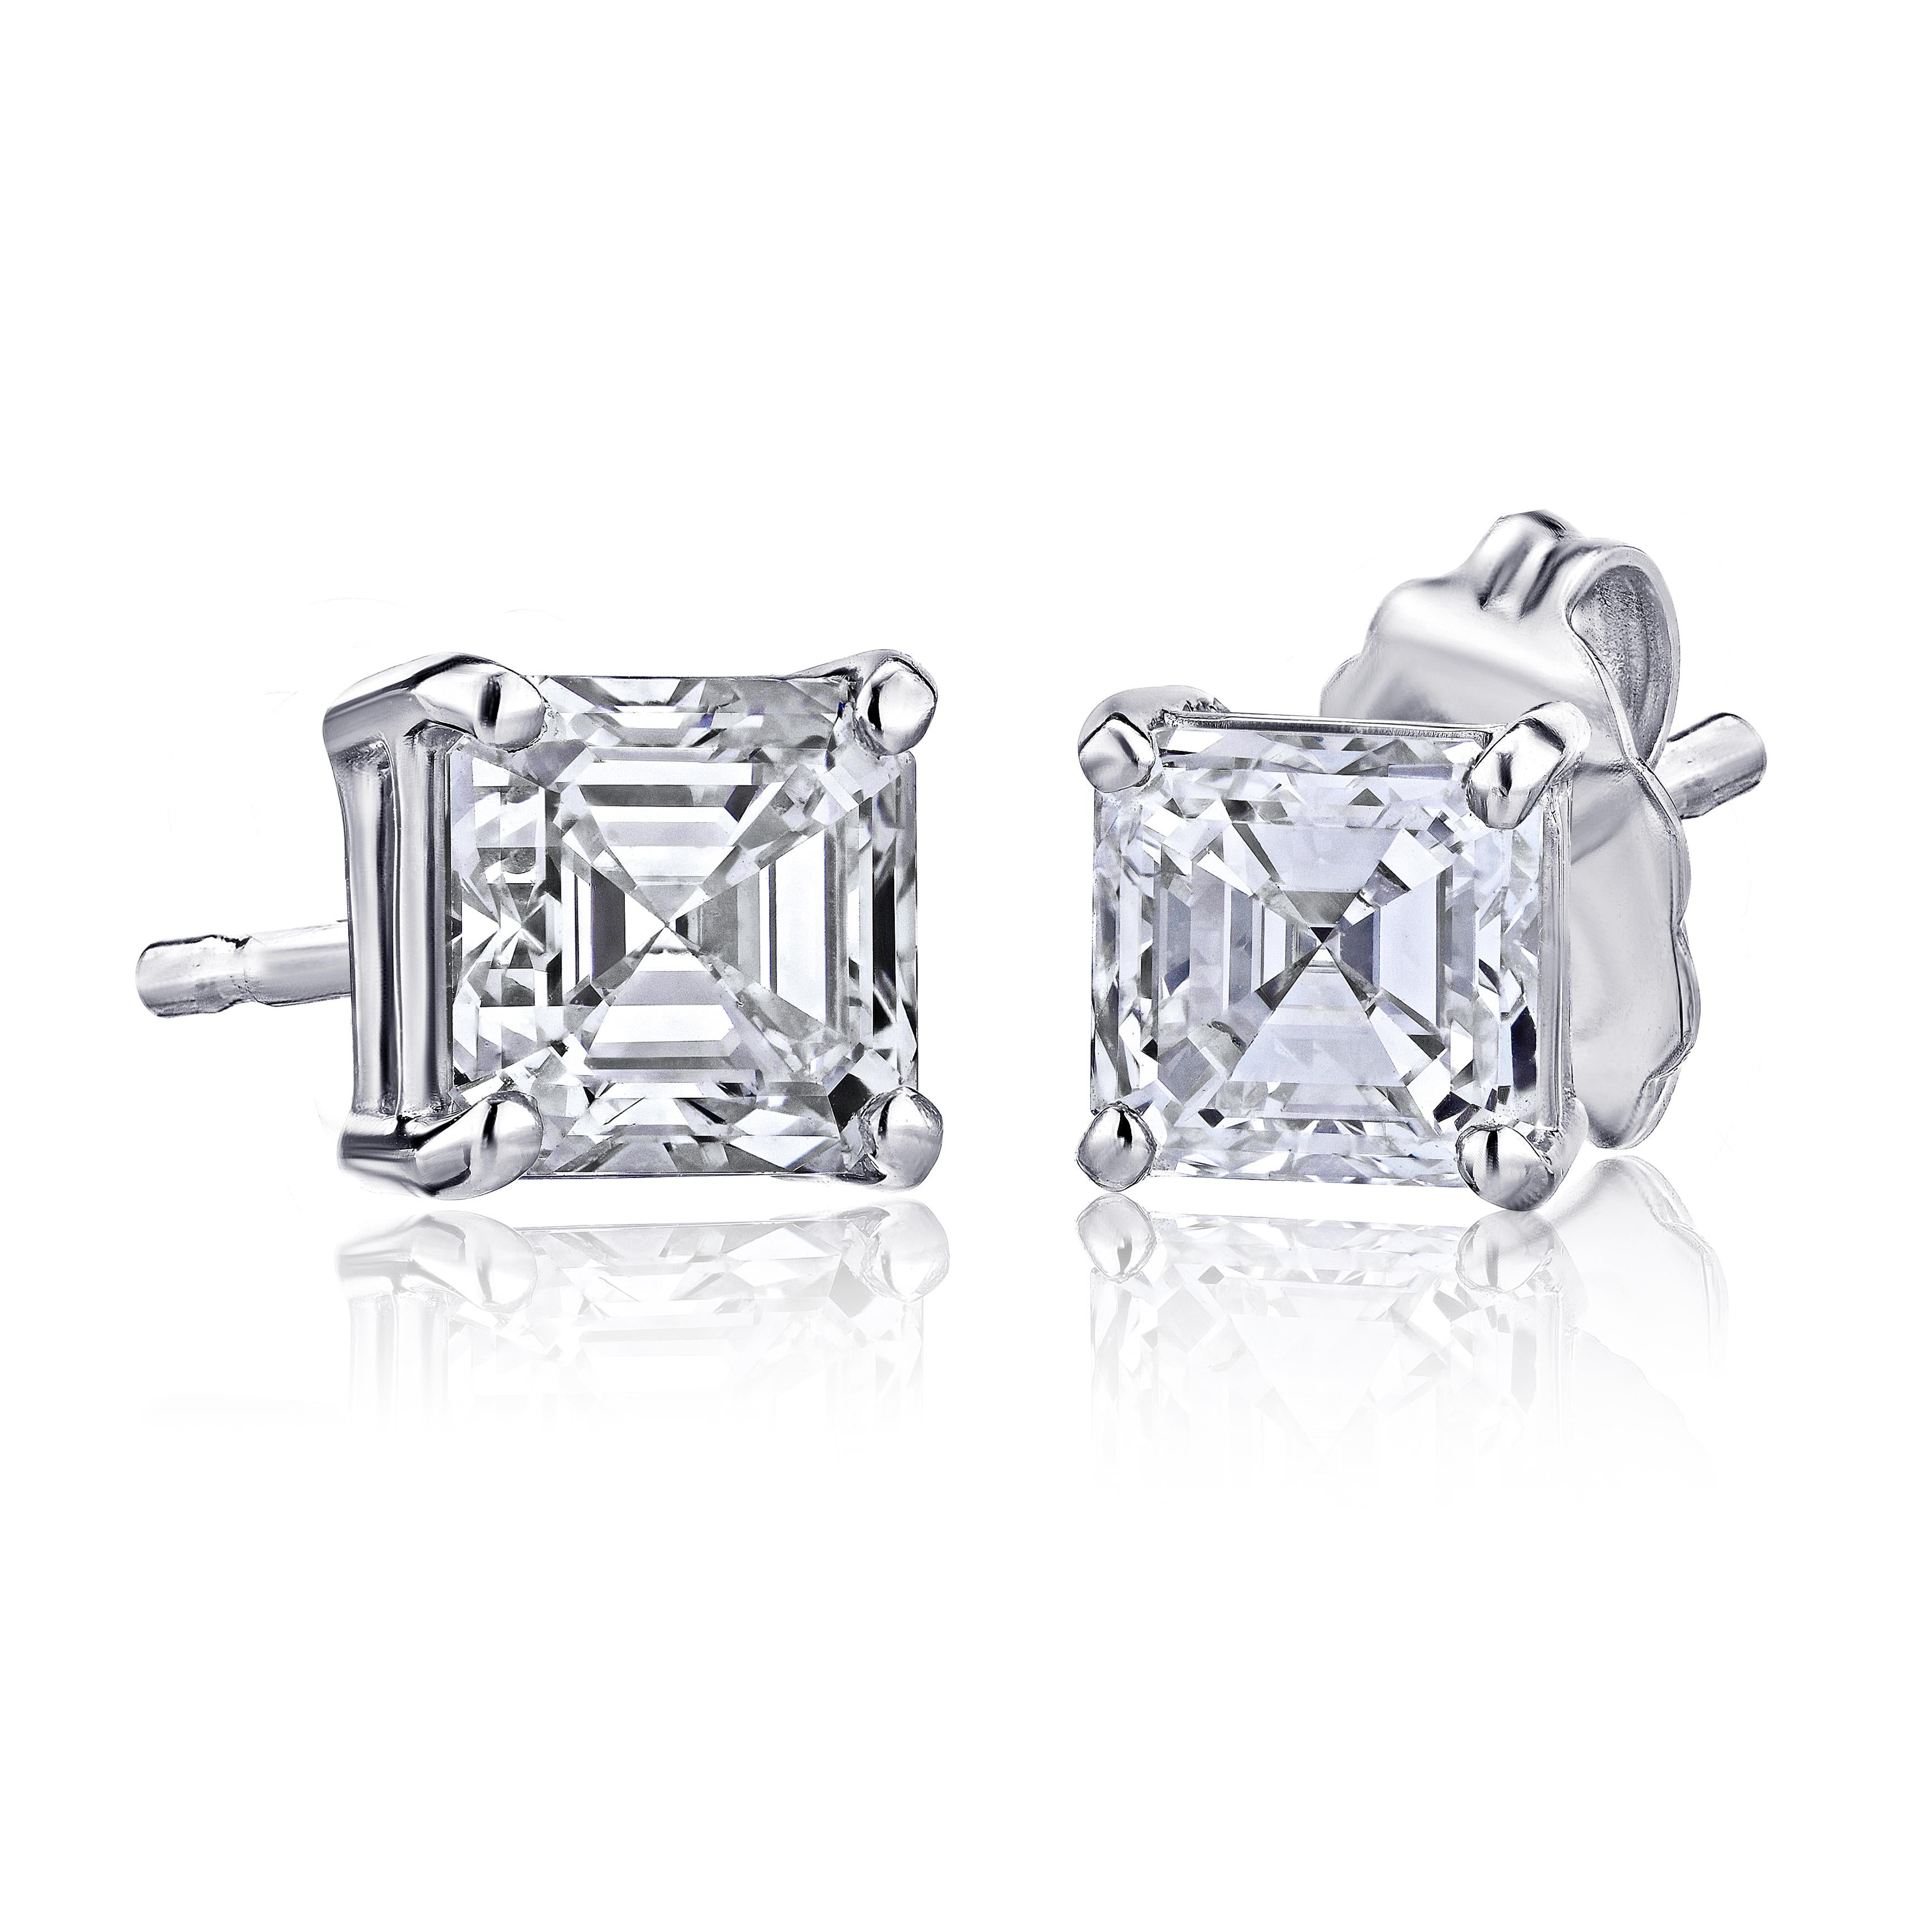 Contemporary Gia Certified Platinum Ascher Cut Diamond Studs 0.50 Carat Total